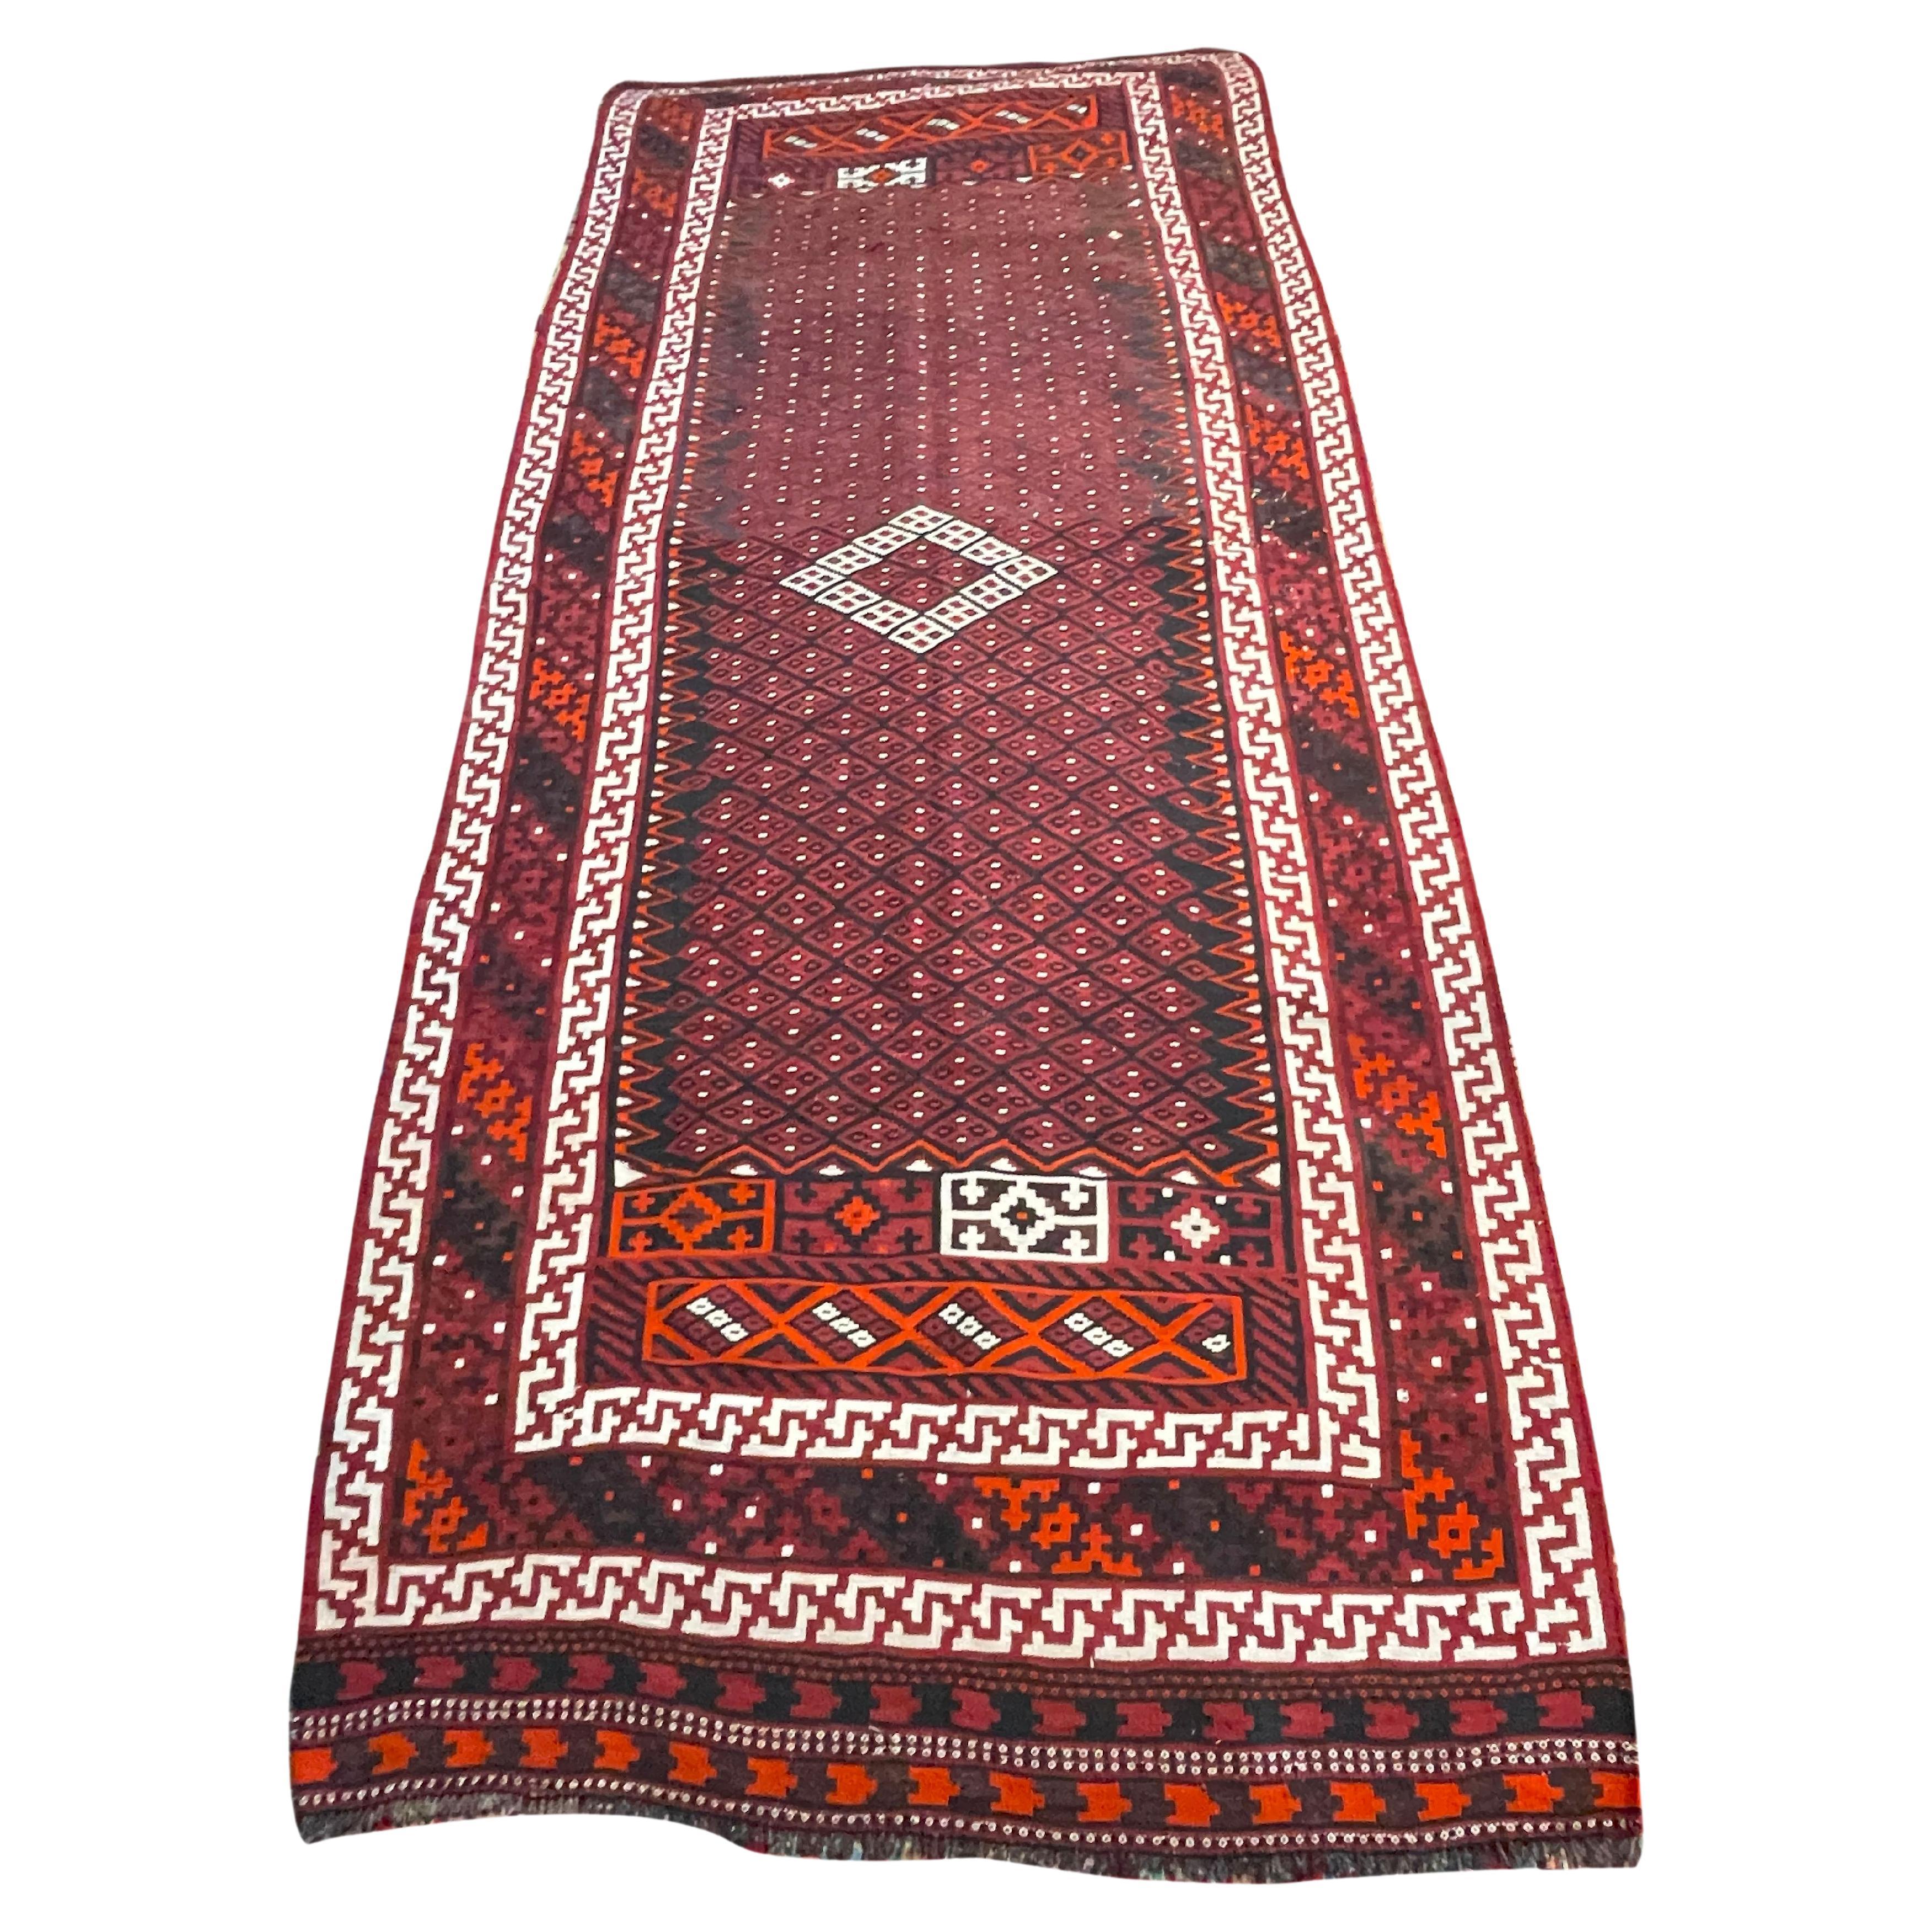 5'x12' Antique Balouci - Persian Flat Woven Kilim - Maroon For Sale